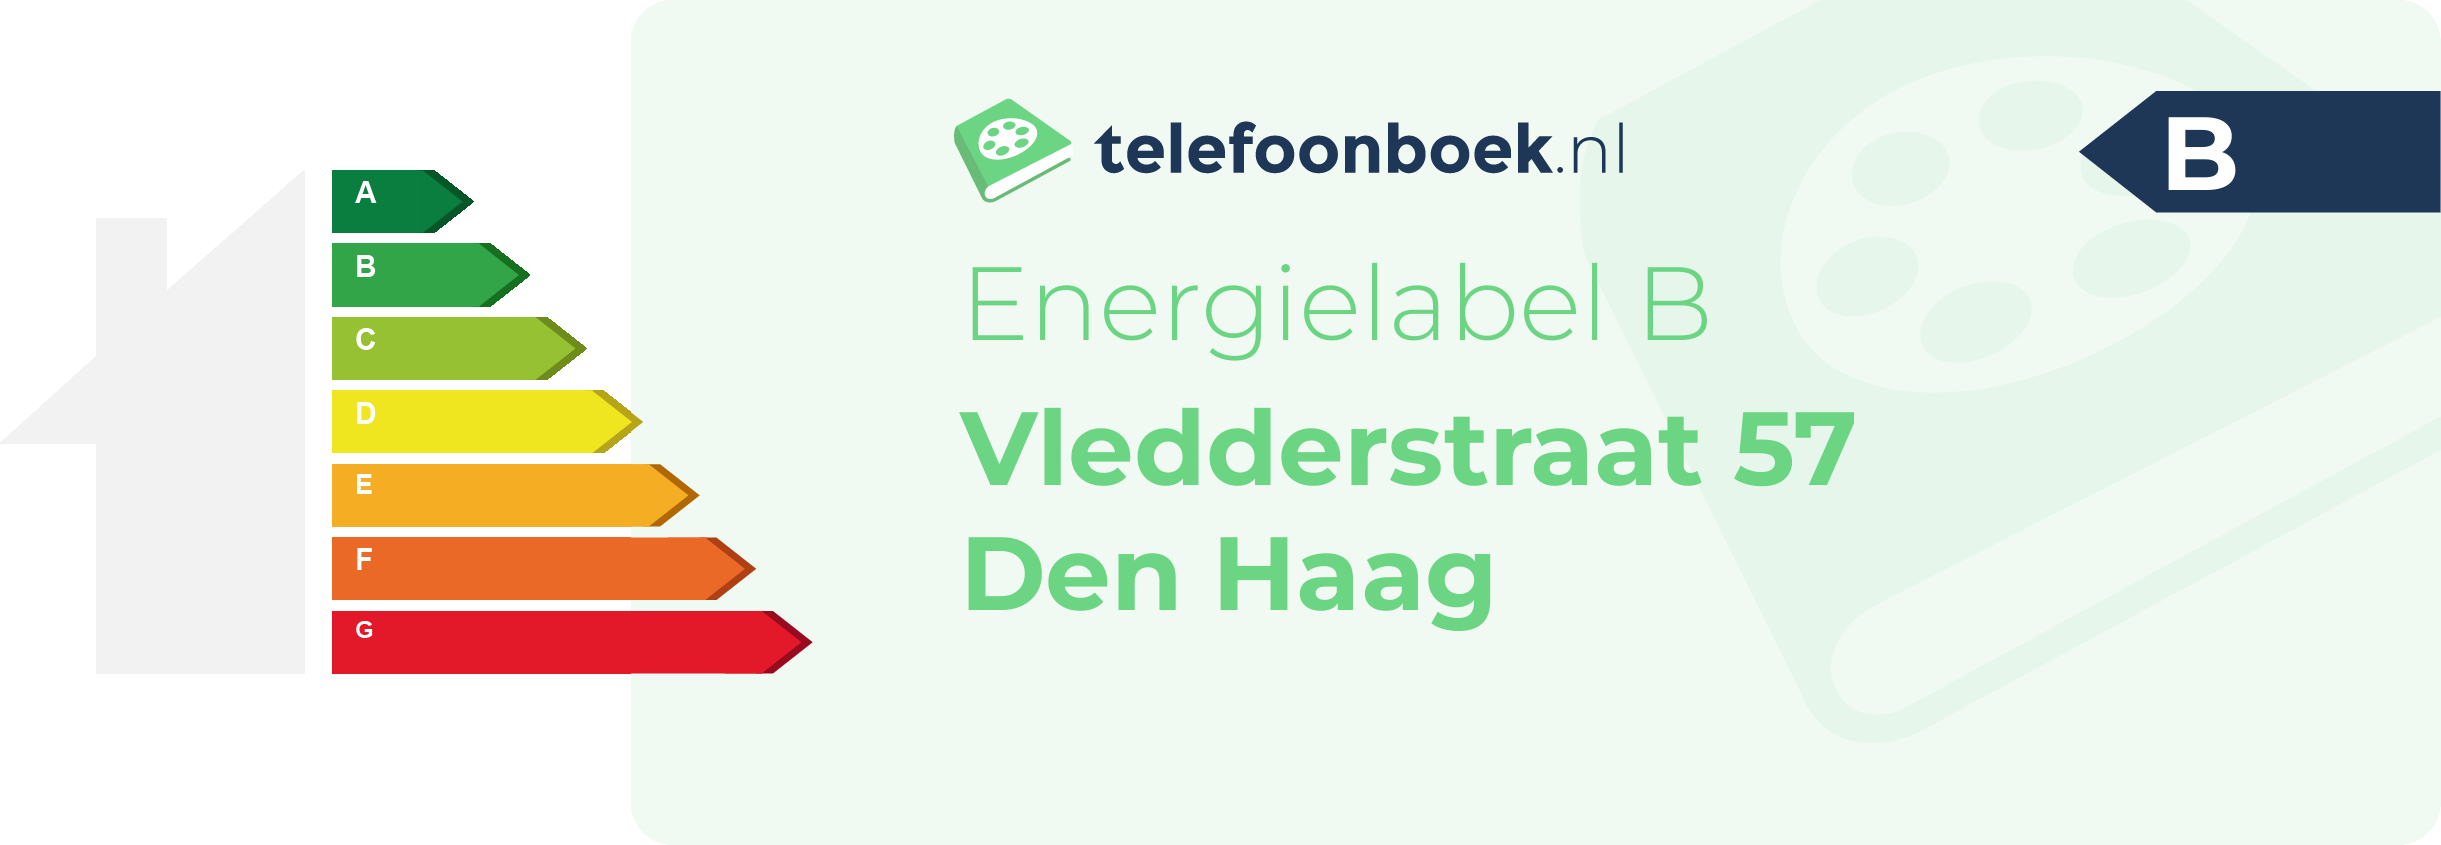 Energielabel Vledderstraat 57 Den Haag